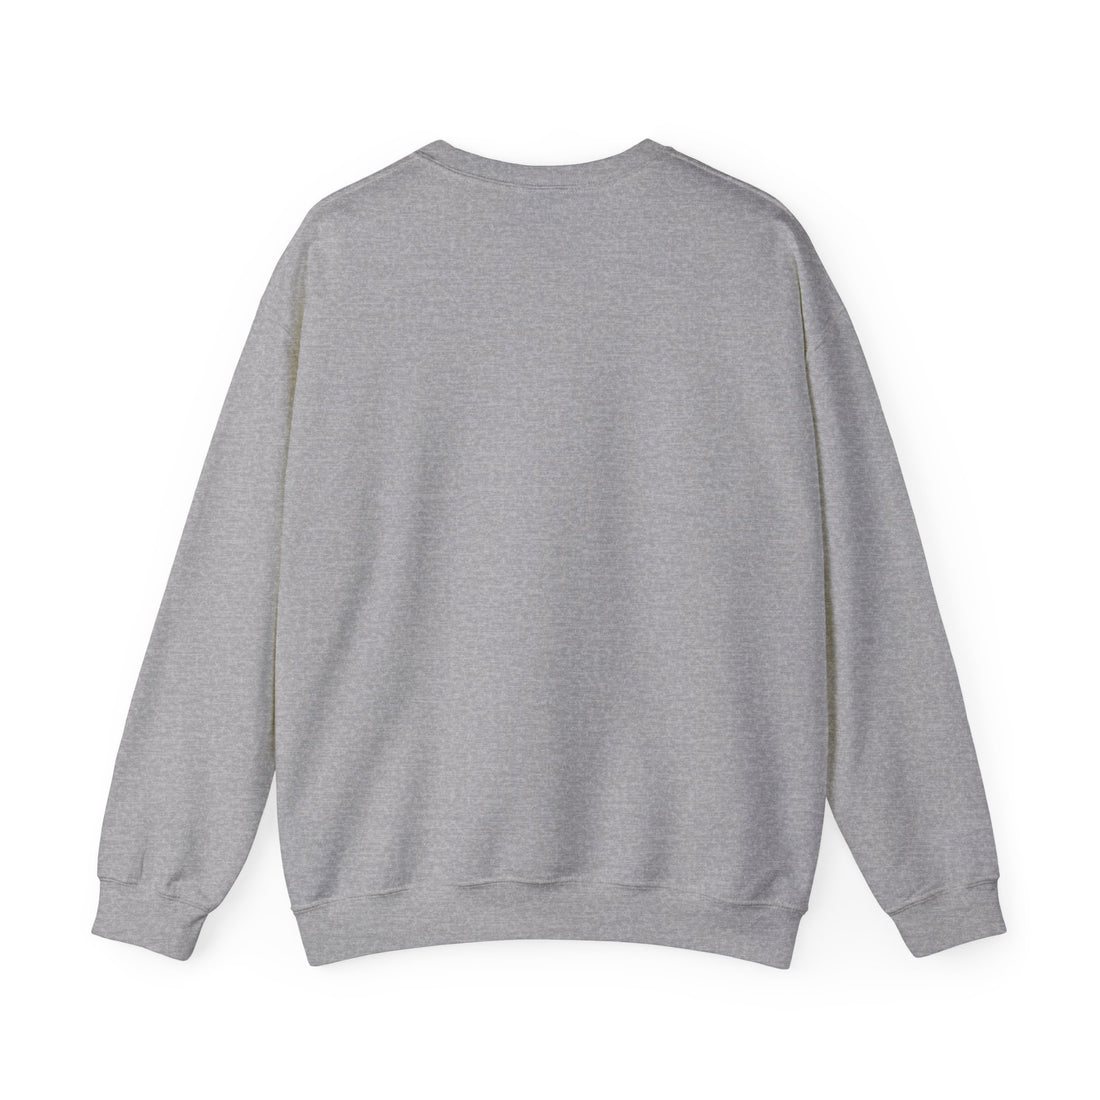 Eritrea x Streetwear Series - Crewneck Sweatshirt